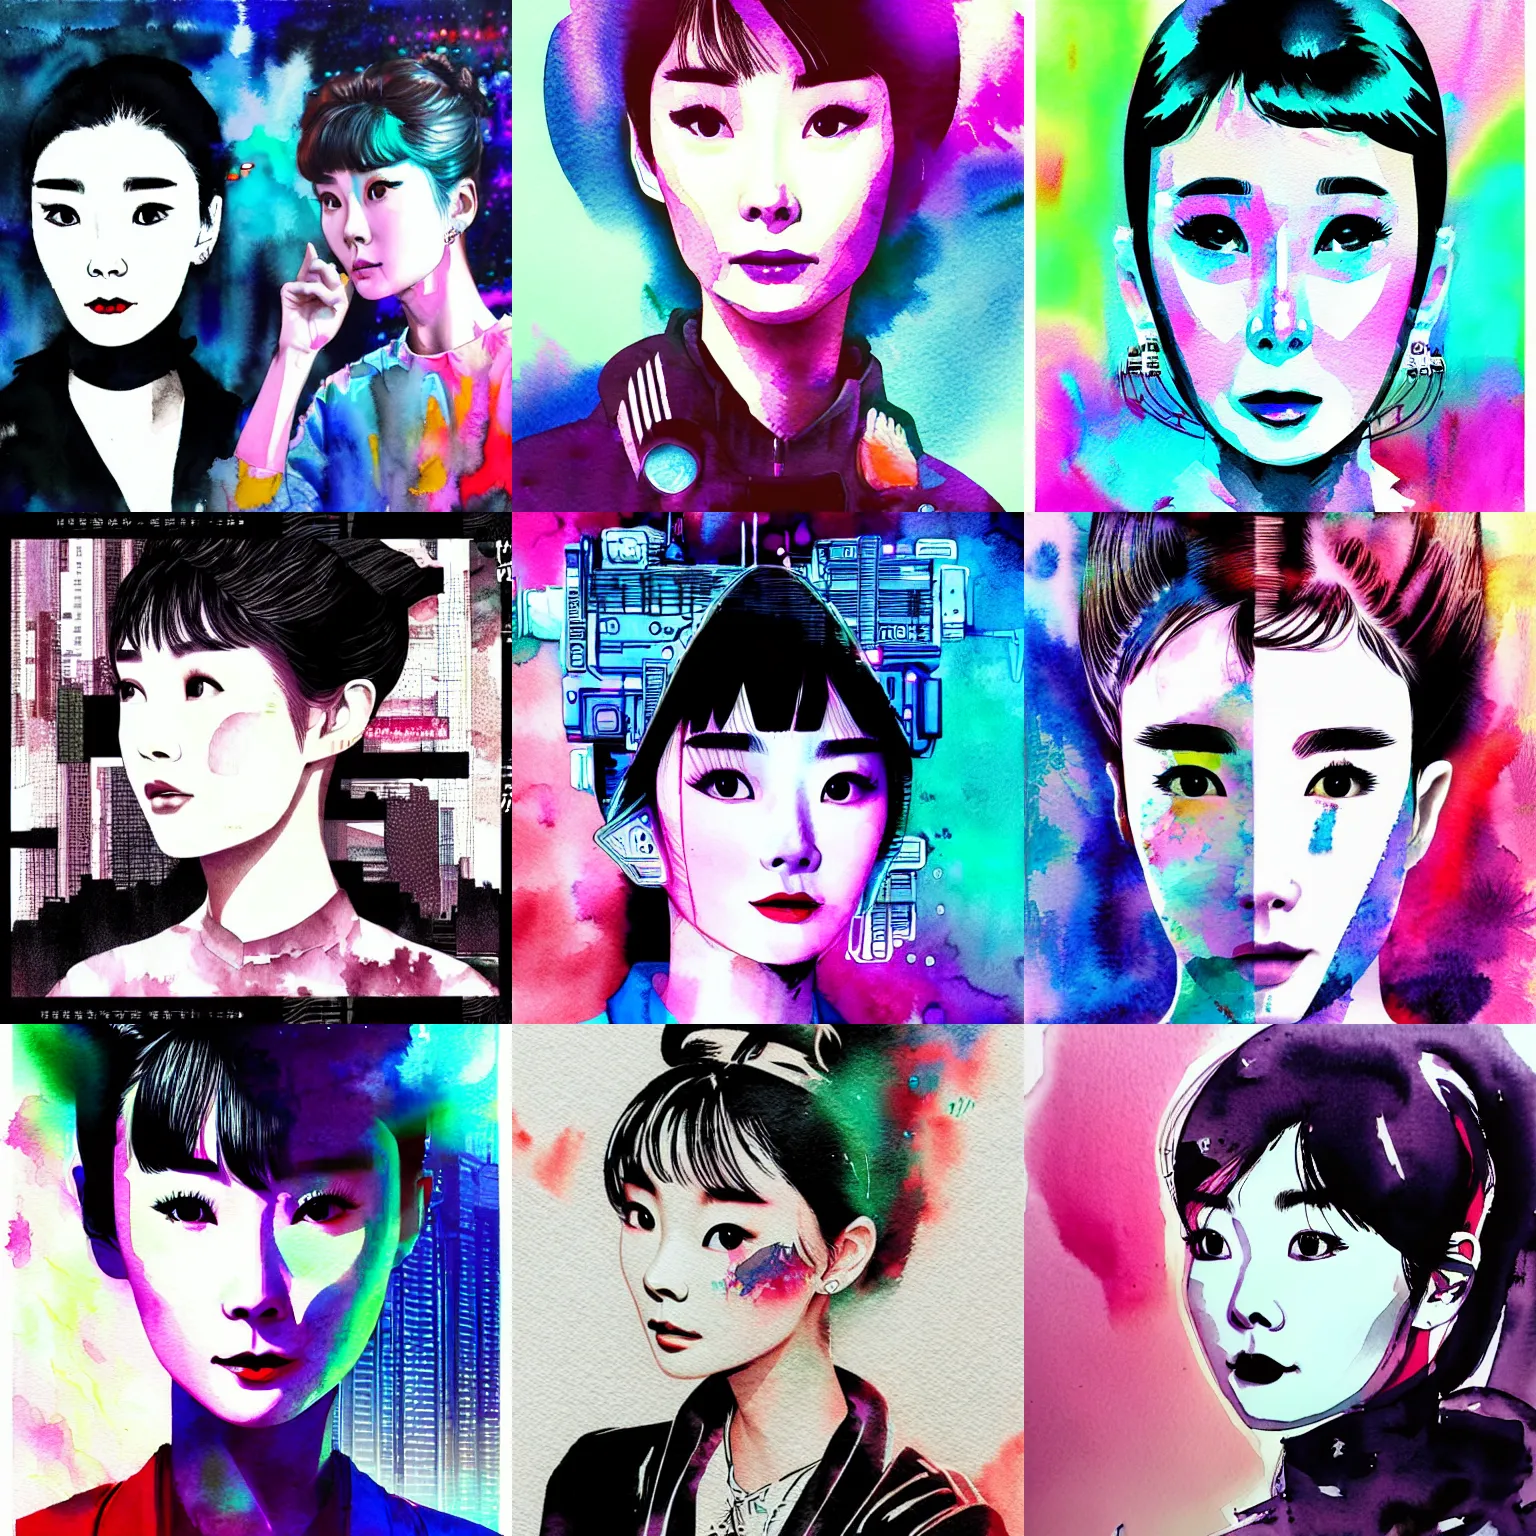 Prompt: korean audrey hepburn, intricate watercolor cyberpunk vaporwave portrait by tim doyle